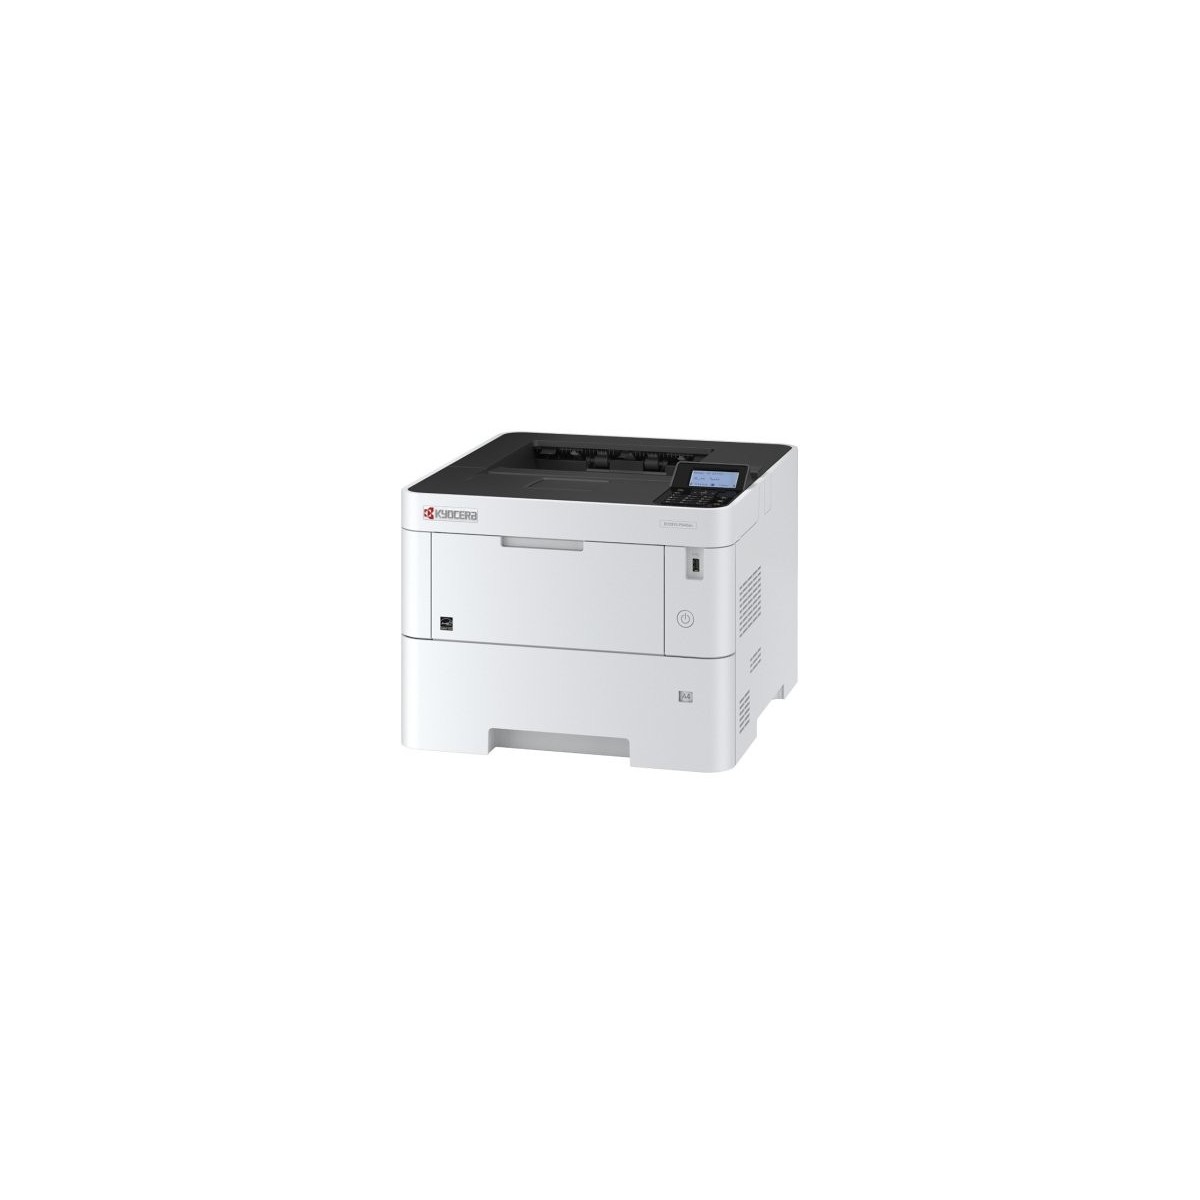 Kyocera ECOSYS P3150dn - Laser - 1200 x 1200 DPI - A4 - 50 ppm - Duplex printing - Network ready